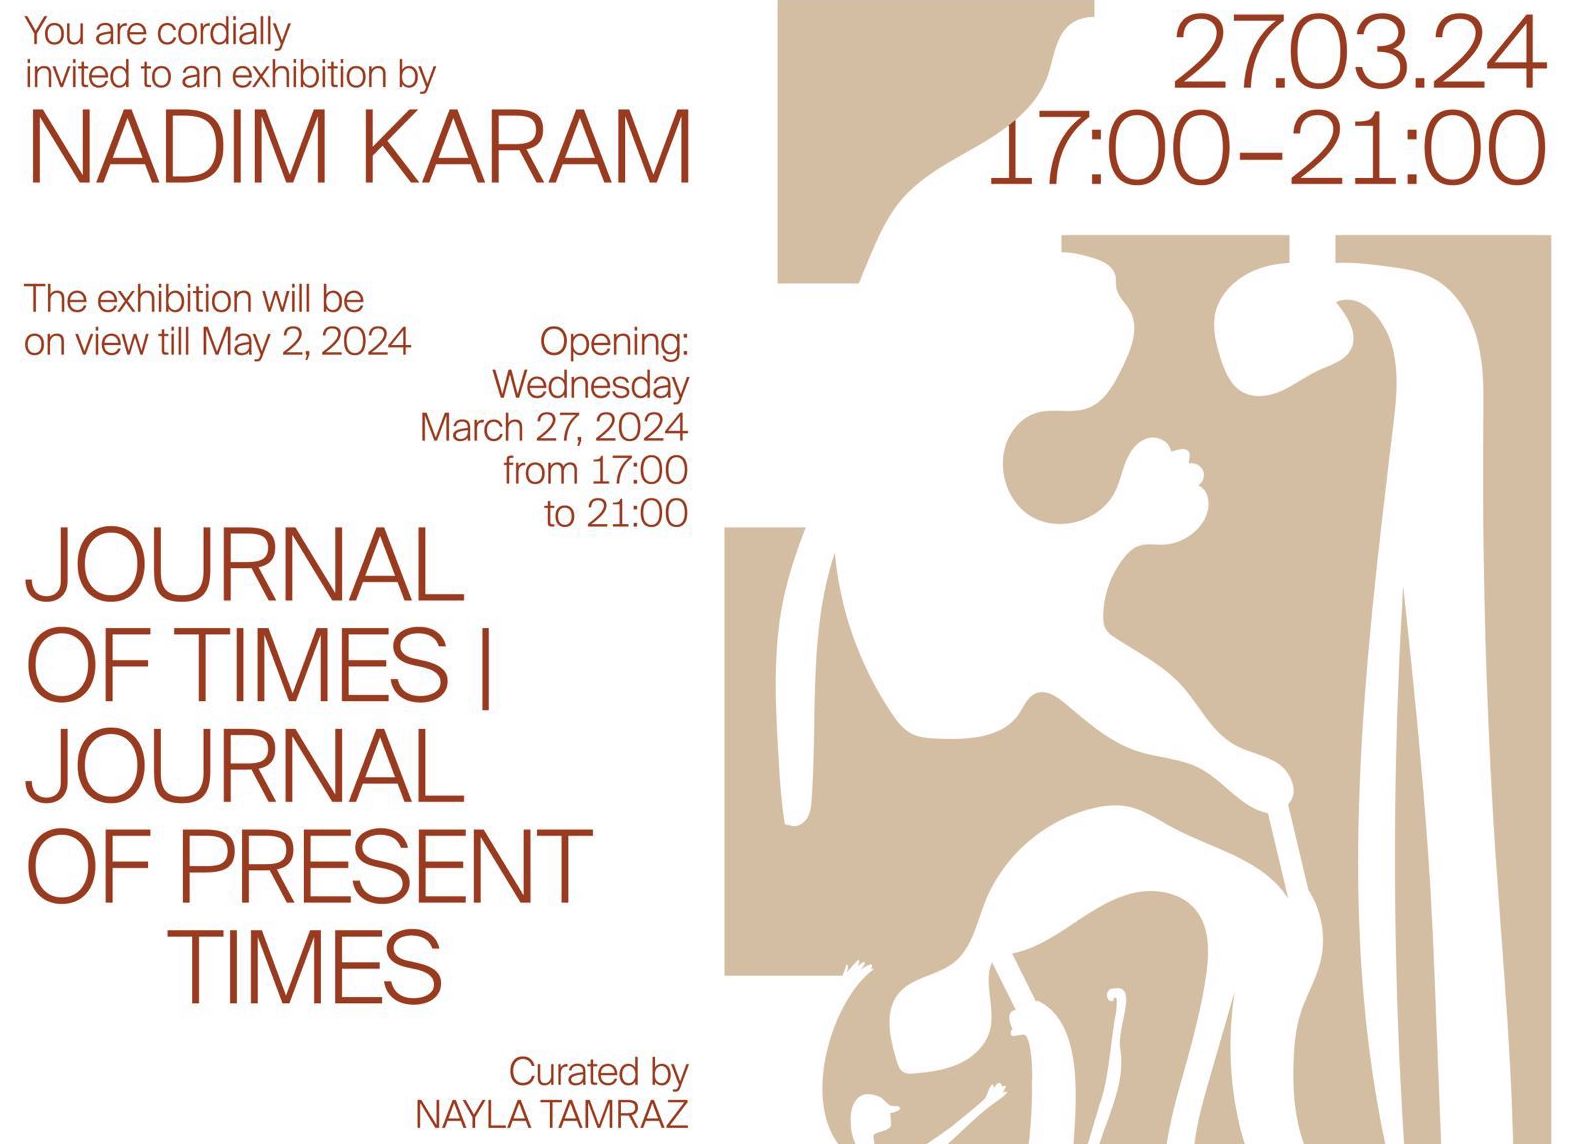 Exposition Nadim Karam vendredi 12 avril